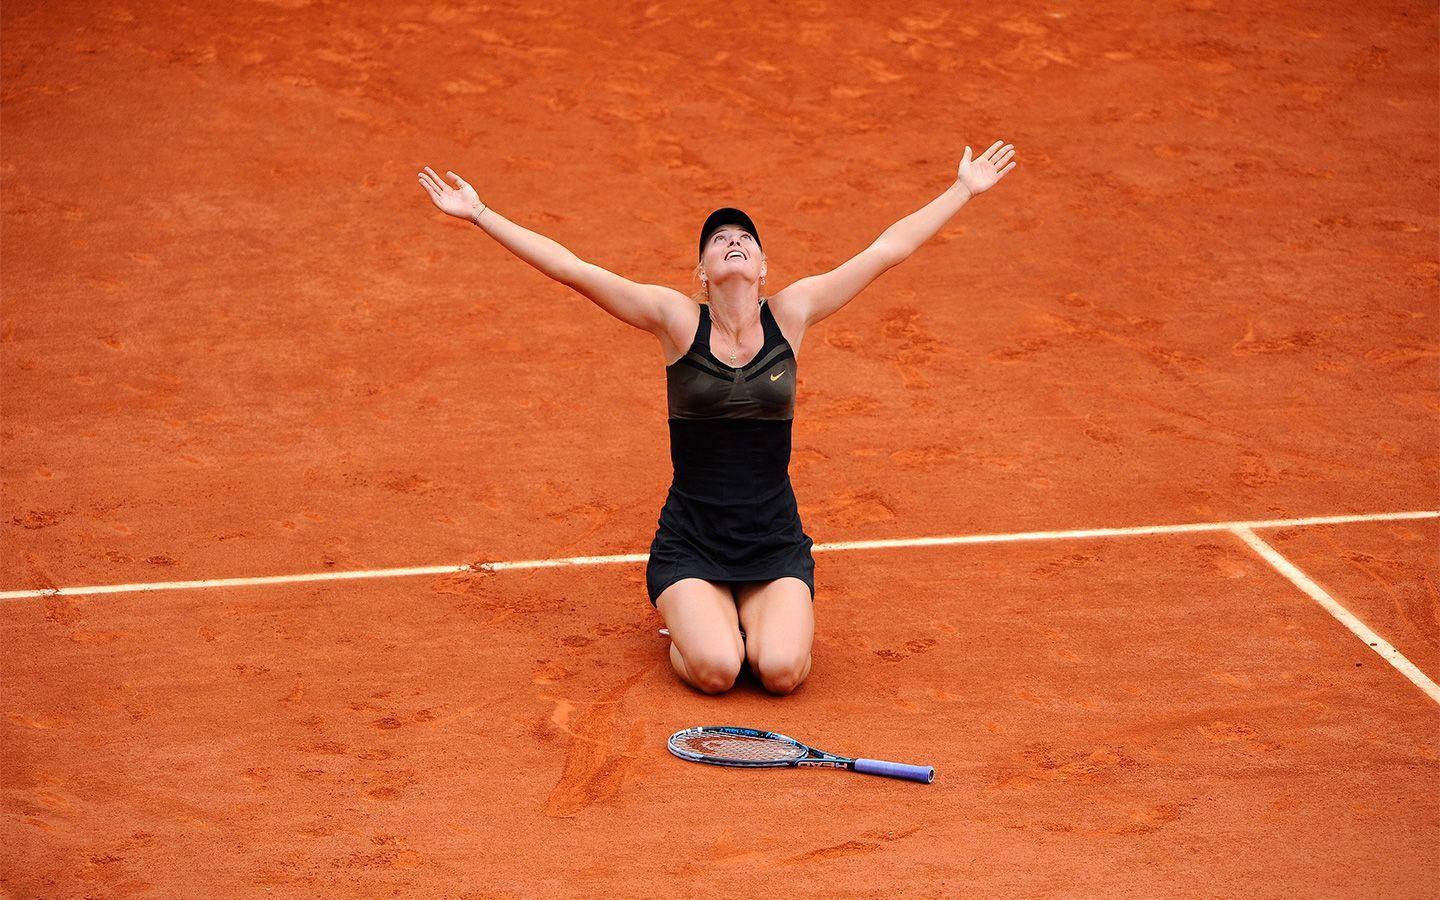 French Open Player Maria Sharapova